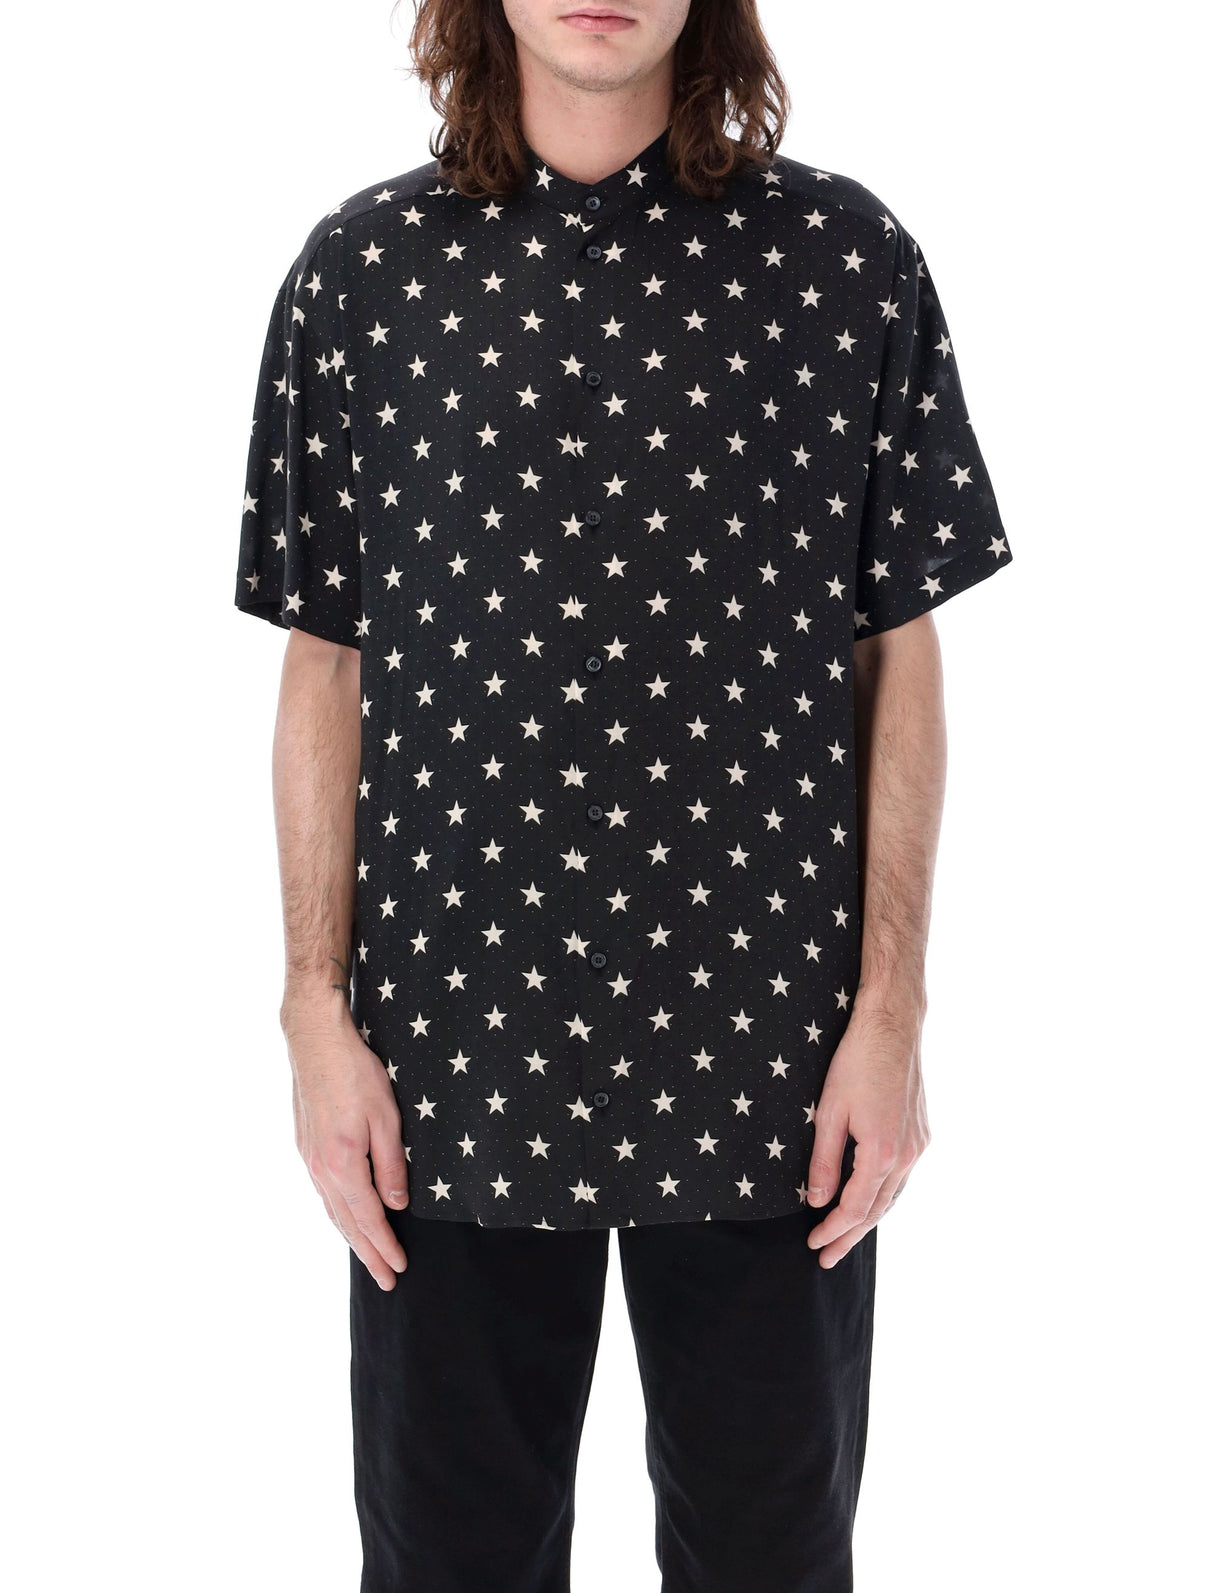 BALMAIN Men's Star Print Shirt - Black